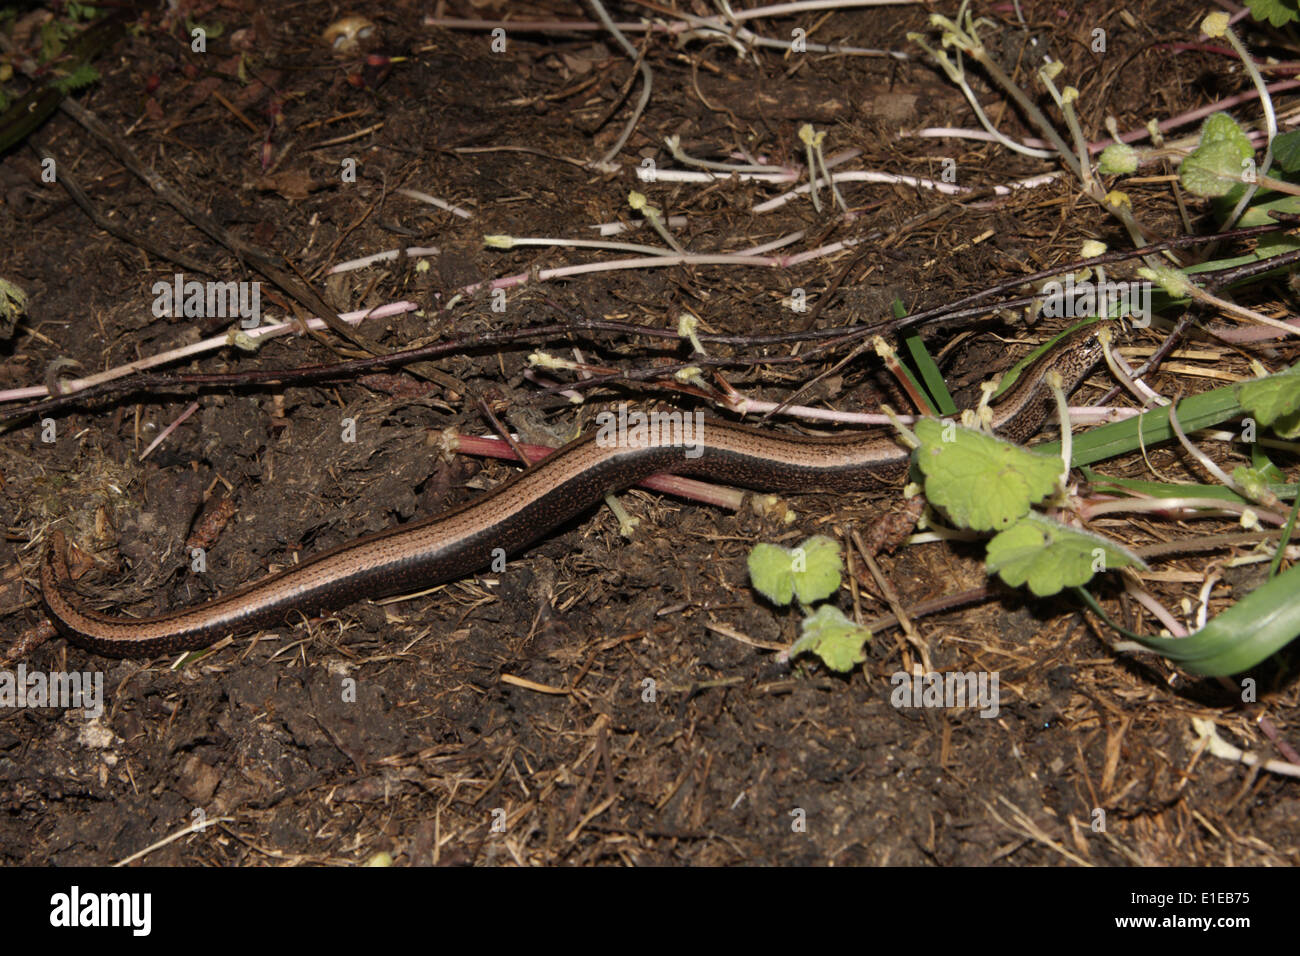 Female Slow-worm Stock Photo